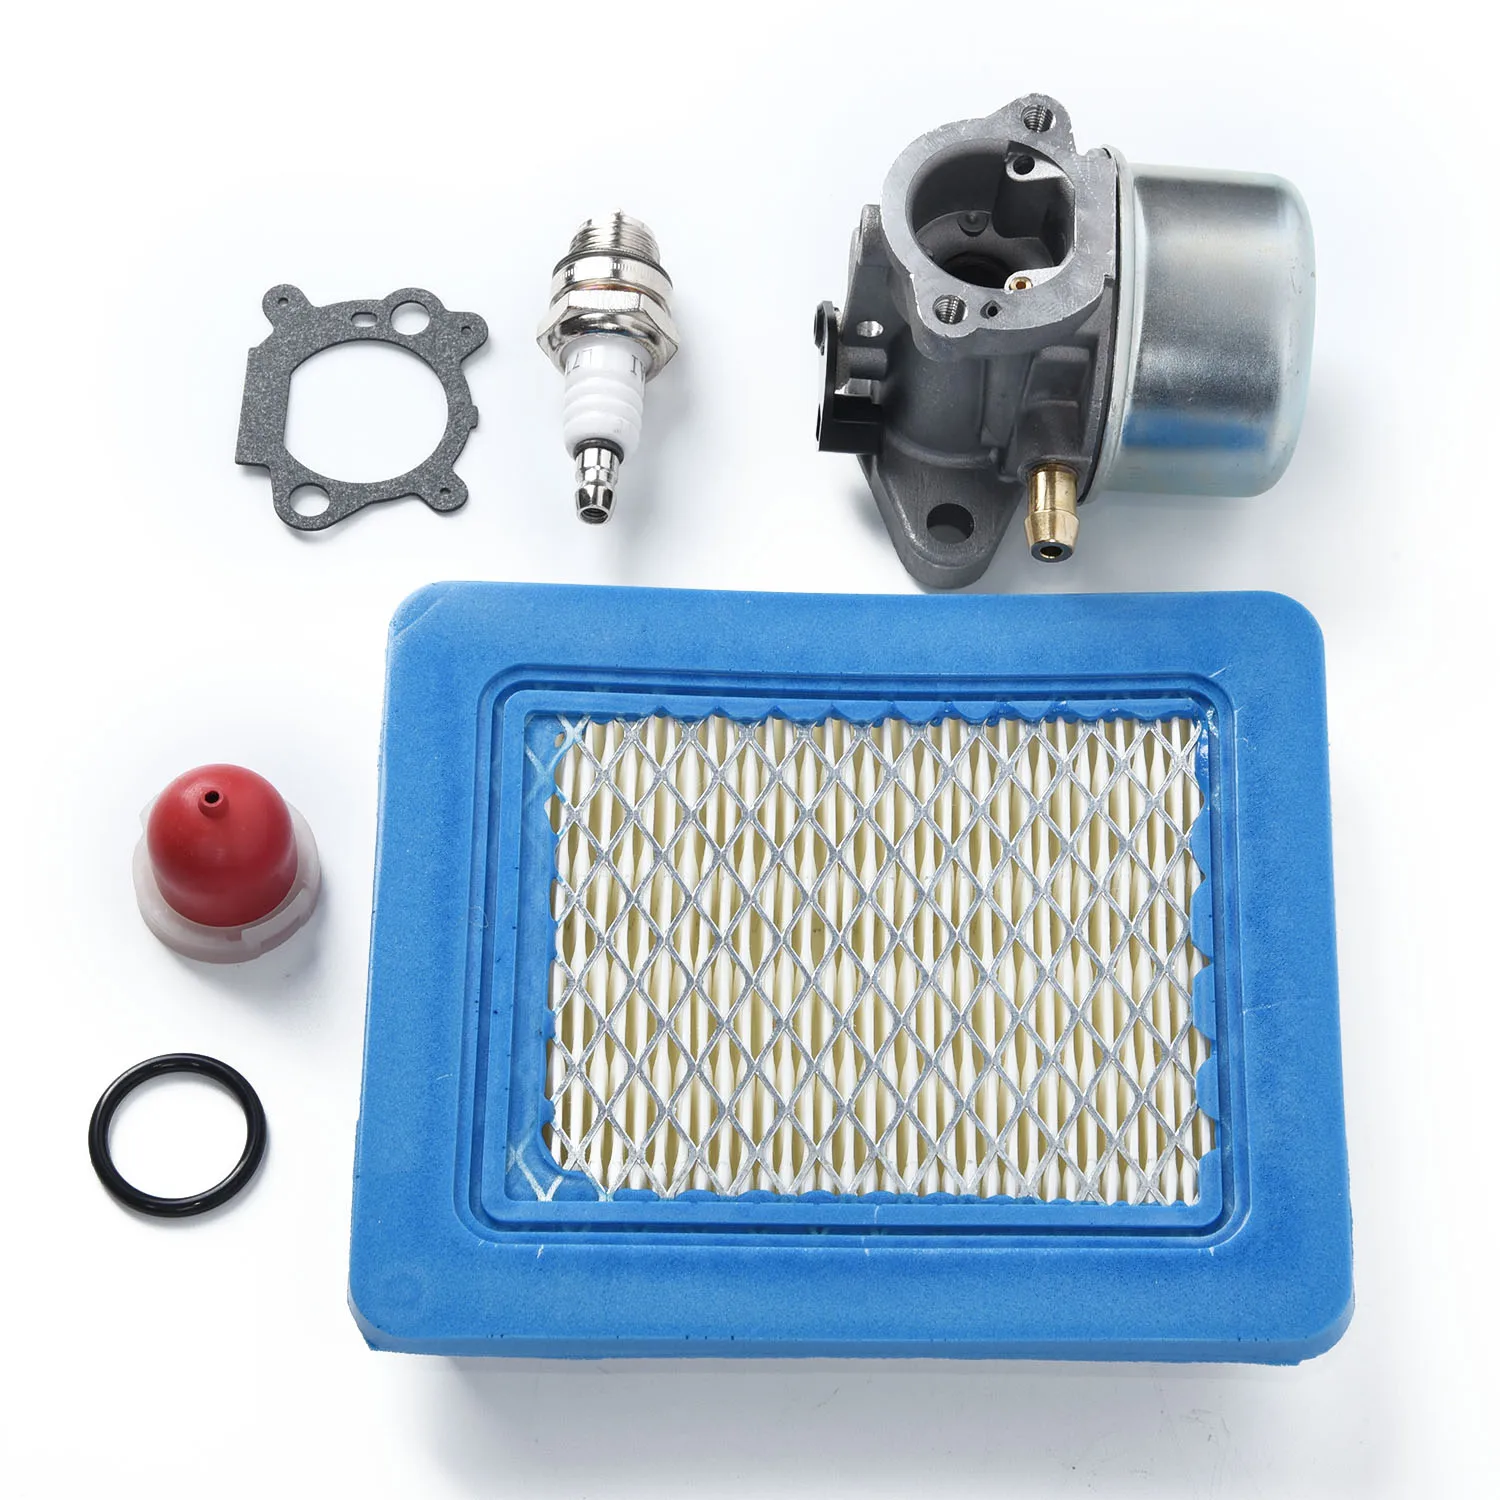 

Bulb cap Carburetor Accessories Replacement Tools Spare Parts Air filter Gasket For 650 series Troy Bilt 6.5HP